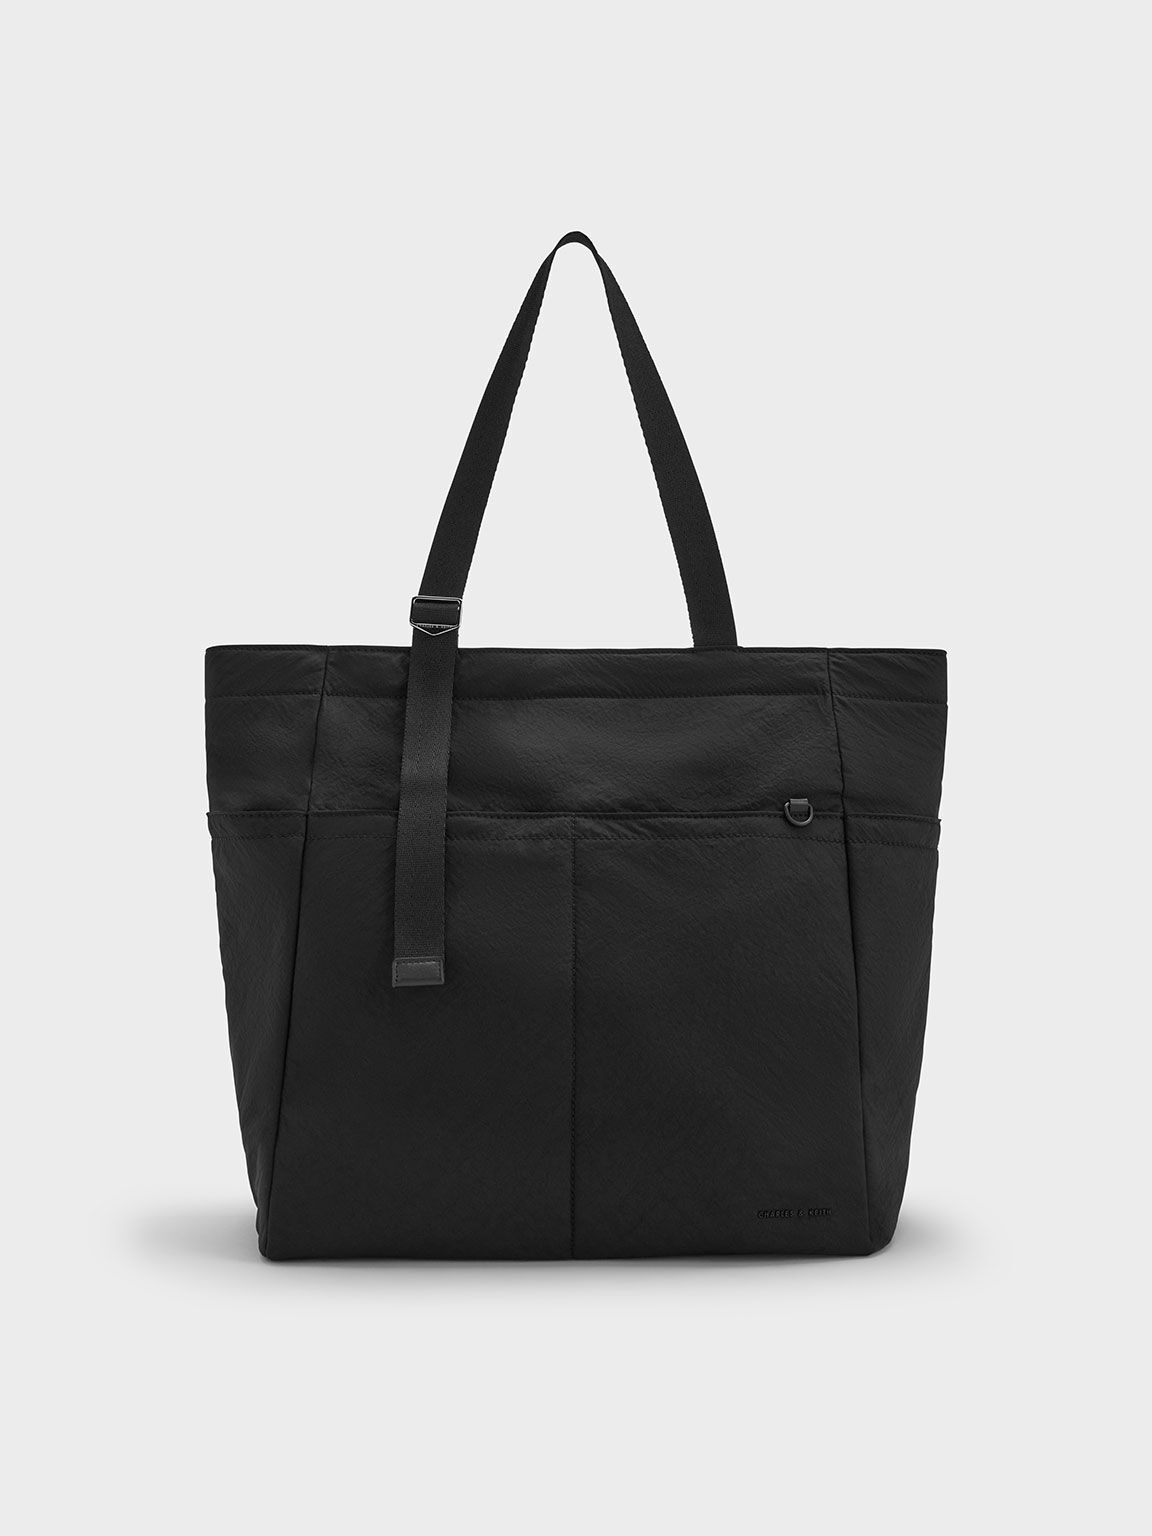 Soleil Nylon Tote Bag, สีดำอะไหล่สีเงิน, hi-res